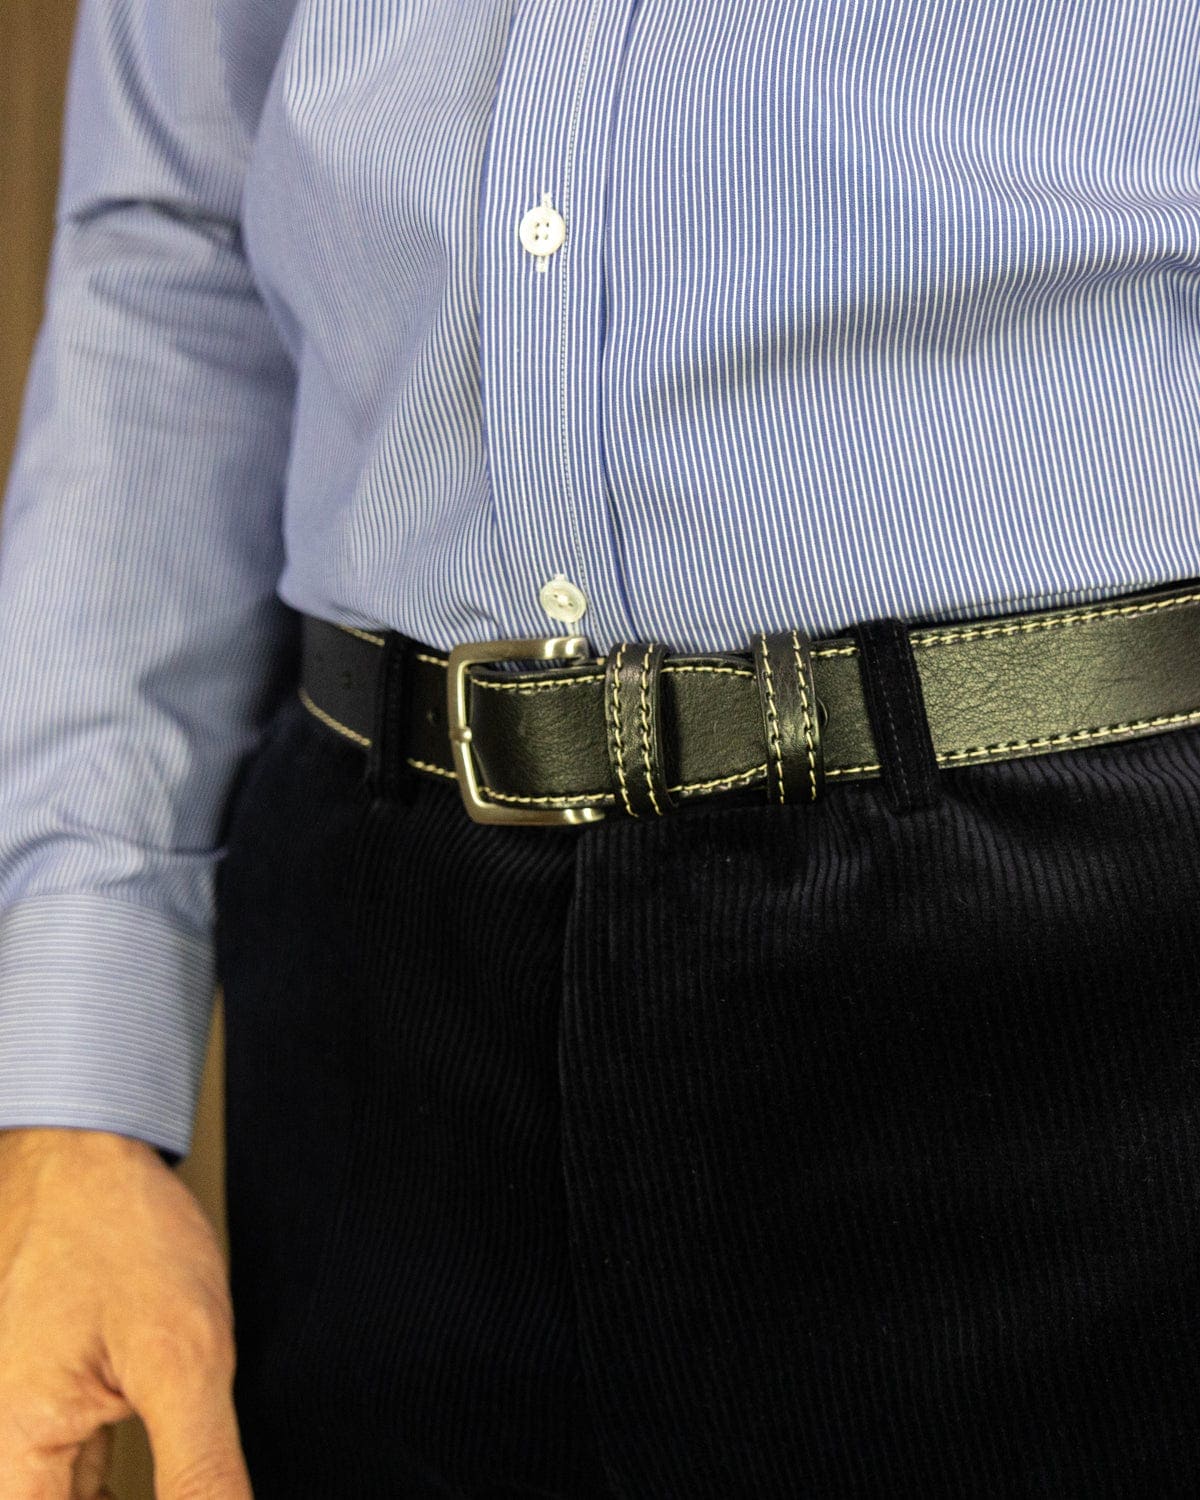 Contemporary Fit, Cut-away Collar, 2 Button Cuff Shirt In Blue & White Stripe